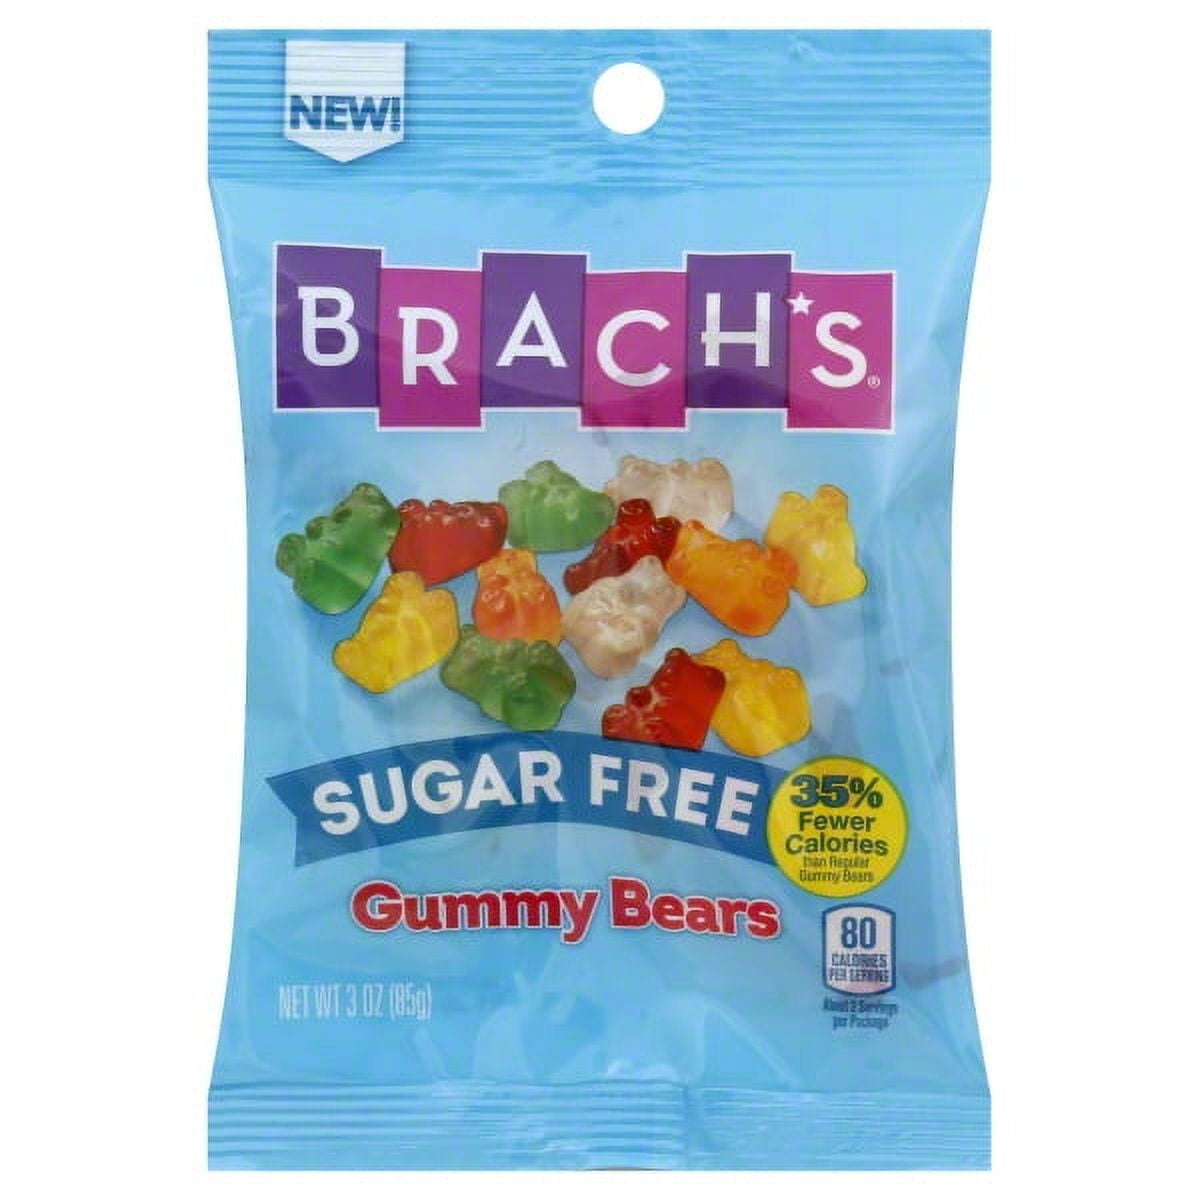  Brach's Sugar Free Gummy Bears, 3 Ounce, Pack of 12